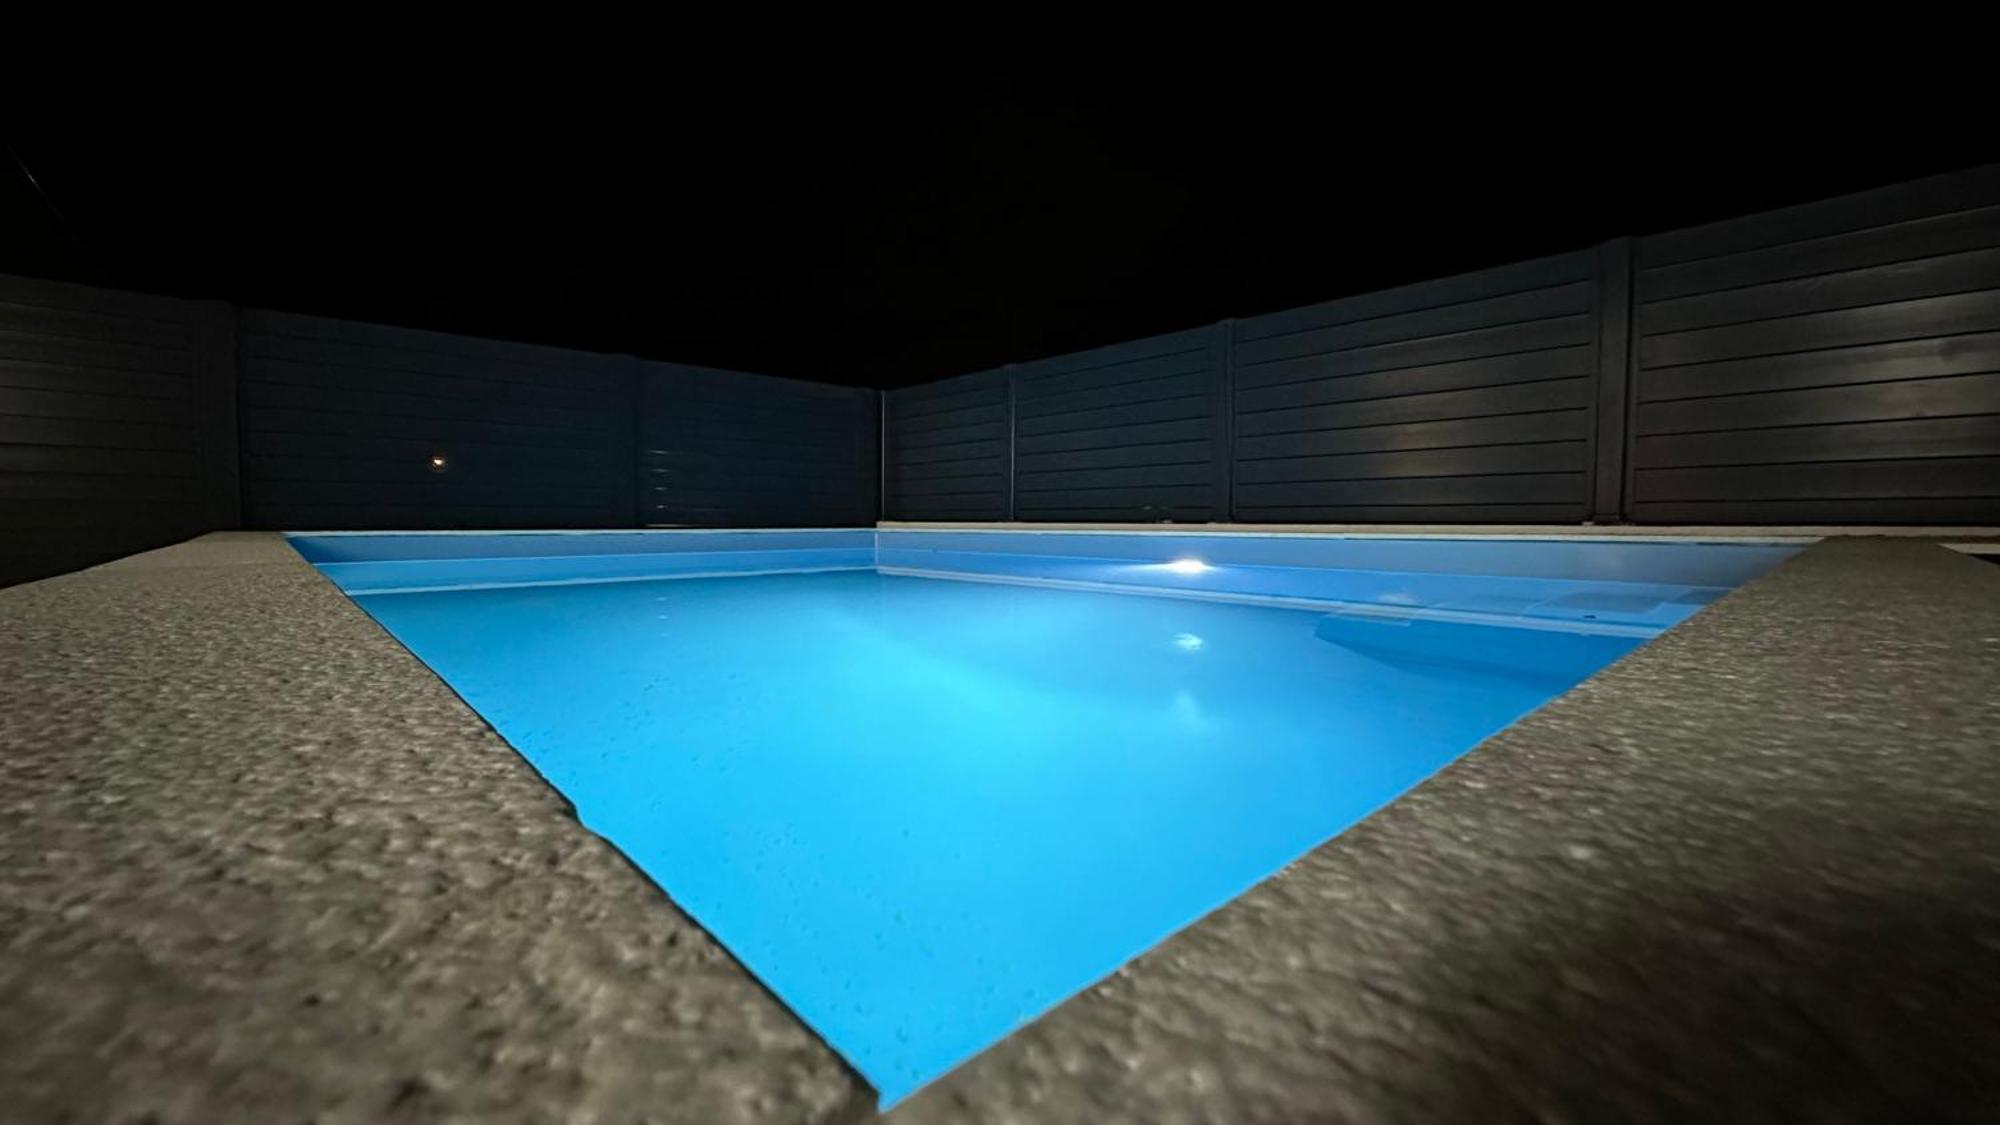 Poolhouse Flip Flop - Mit Privatem Pool Villa Vir Exterior photo